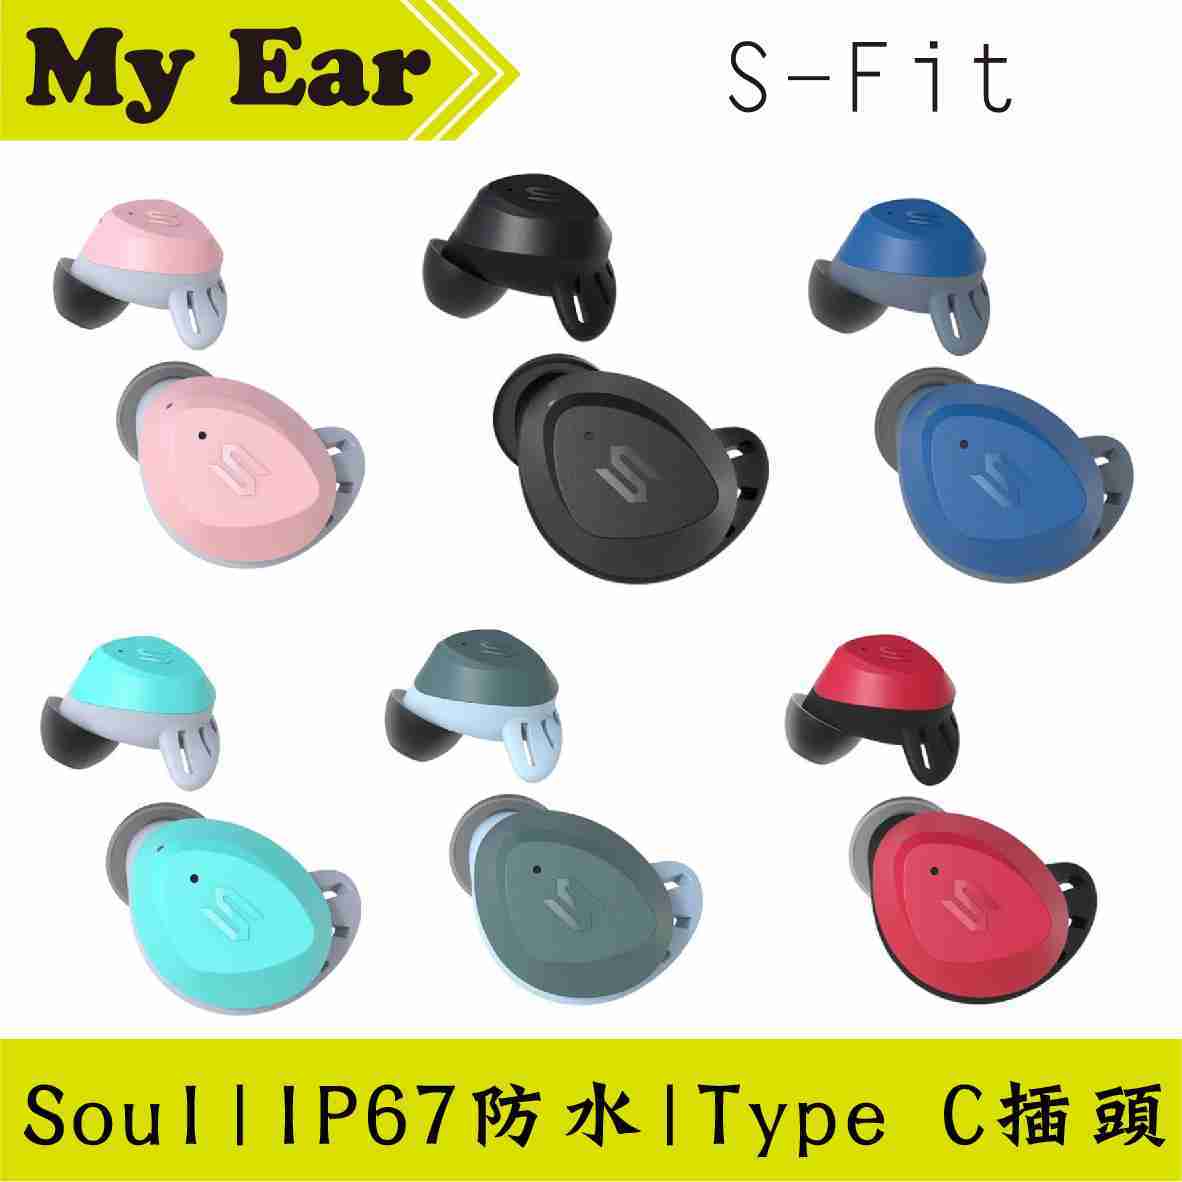 Soul S-Fit 紅色 環境音效 IP67 防塵 防水 藍芽 耳機 | My Ear 耳機專門店